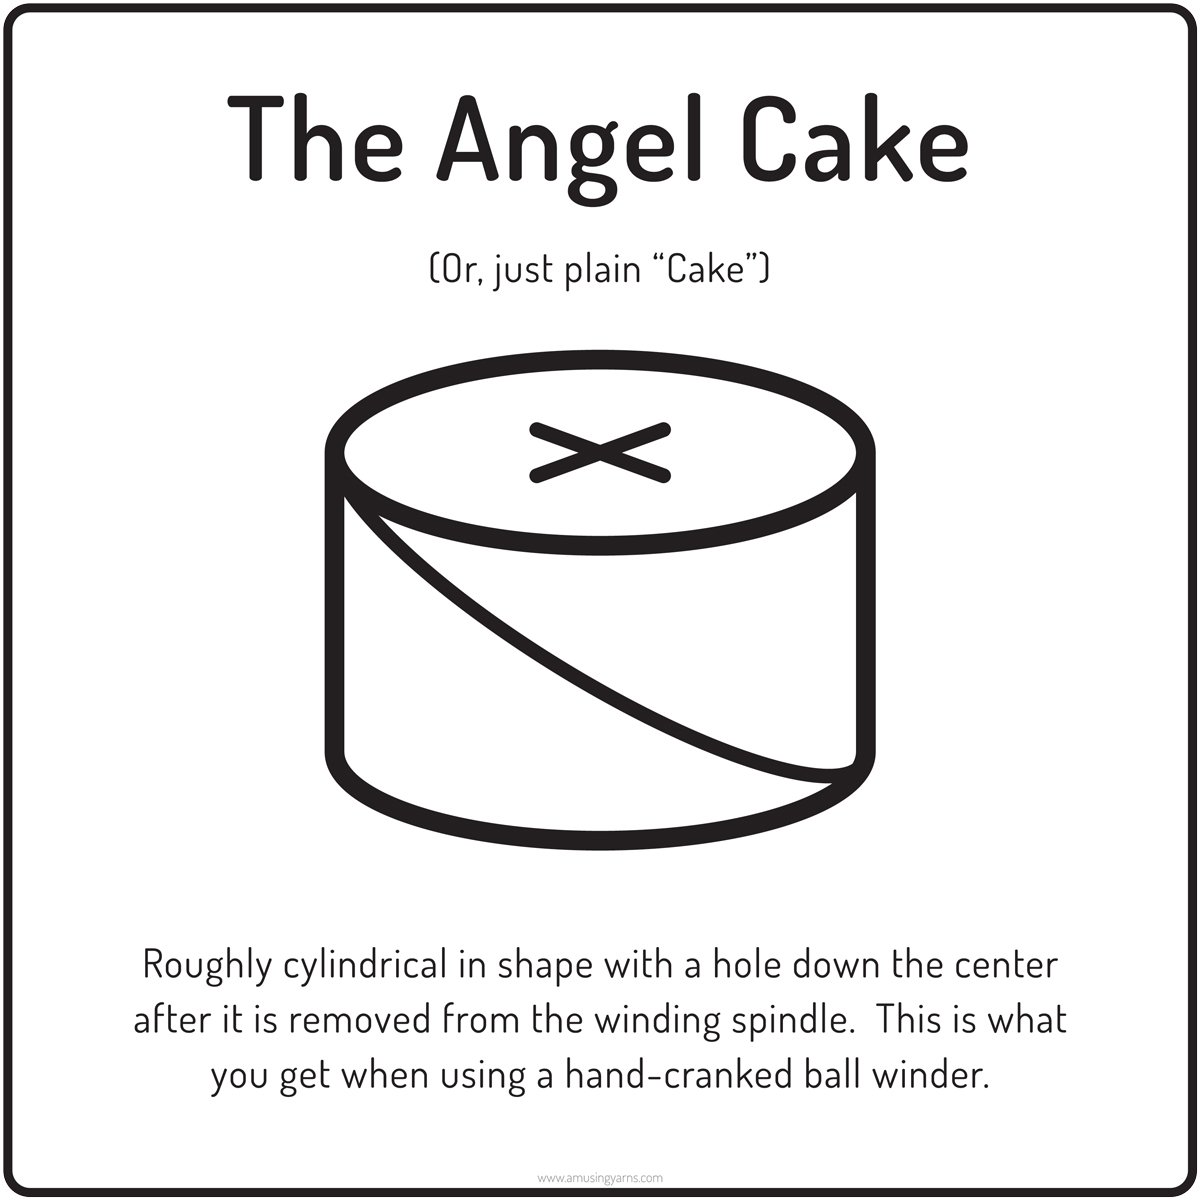 The Angel Cake